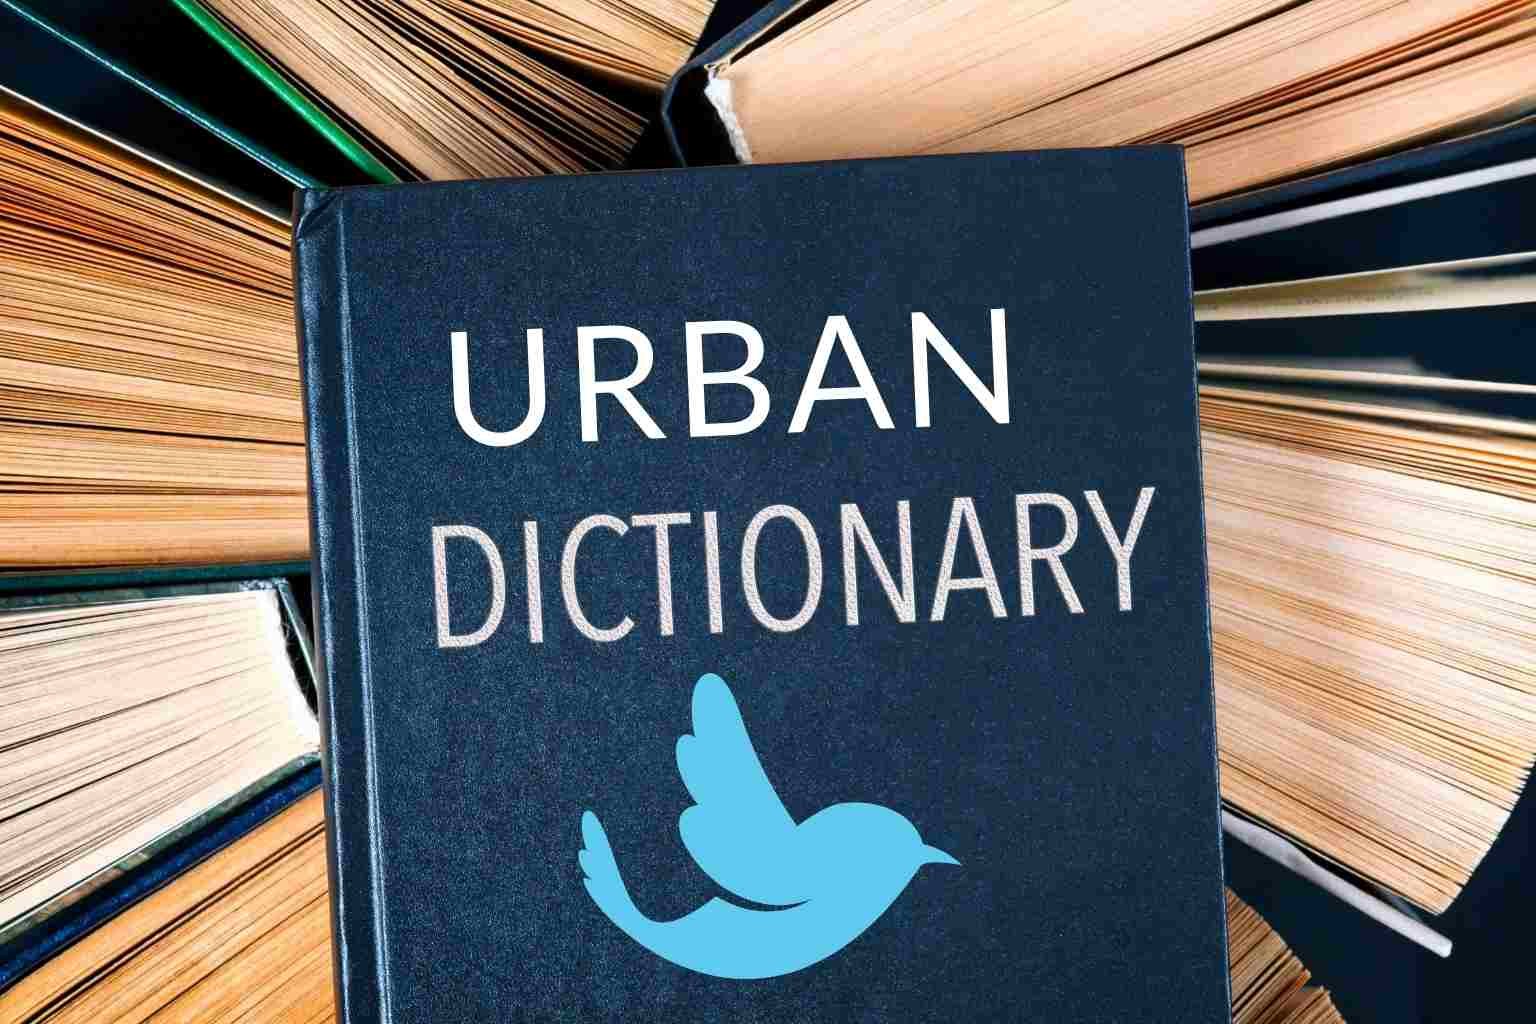 Urban dictionary names